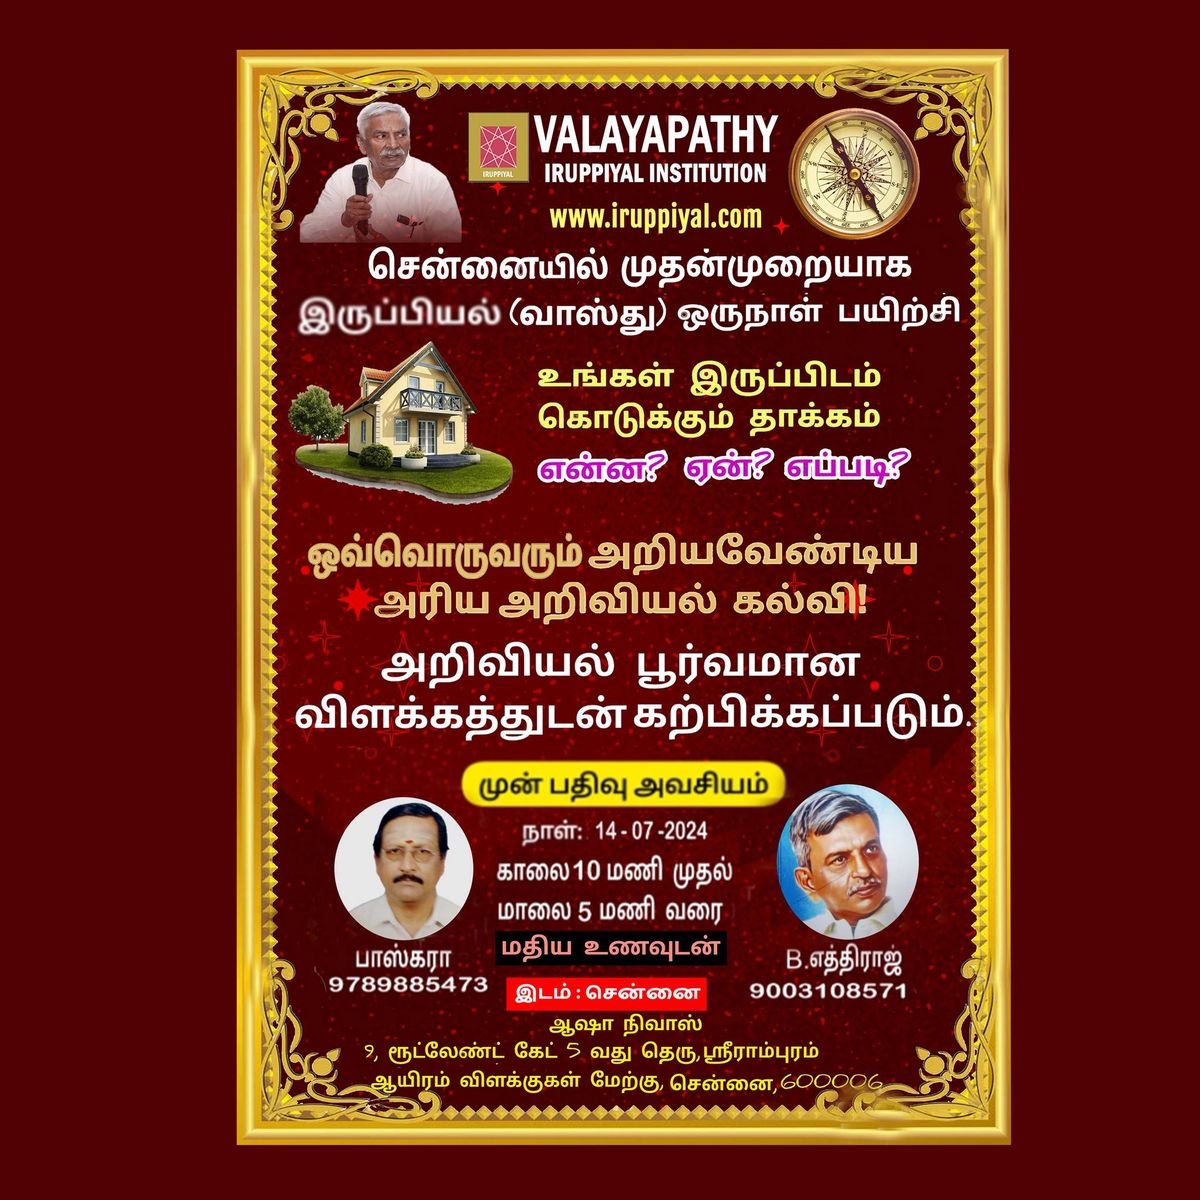 Valayapathy Iruppiyal Institution (Vasthu) Class 